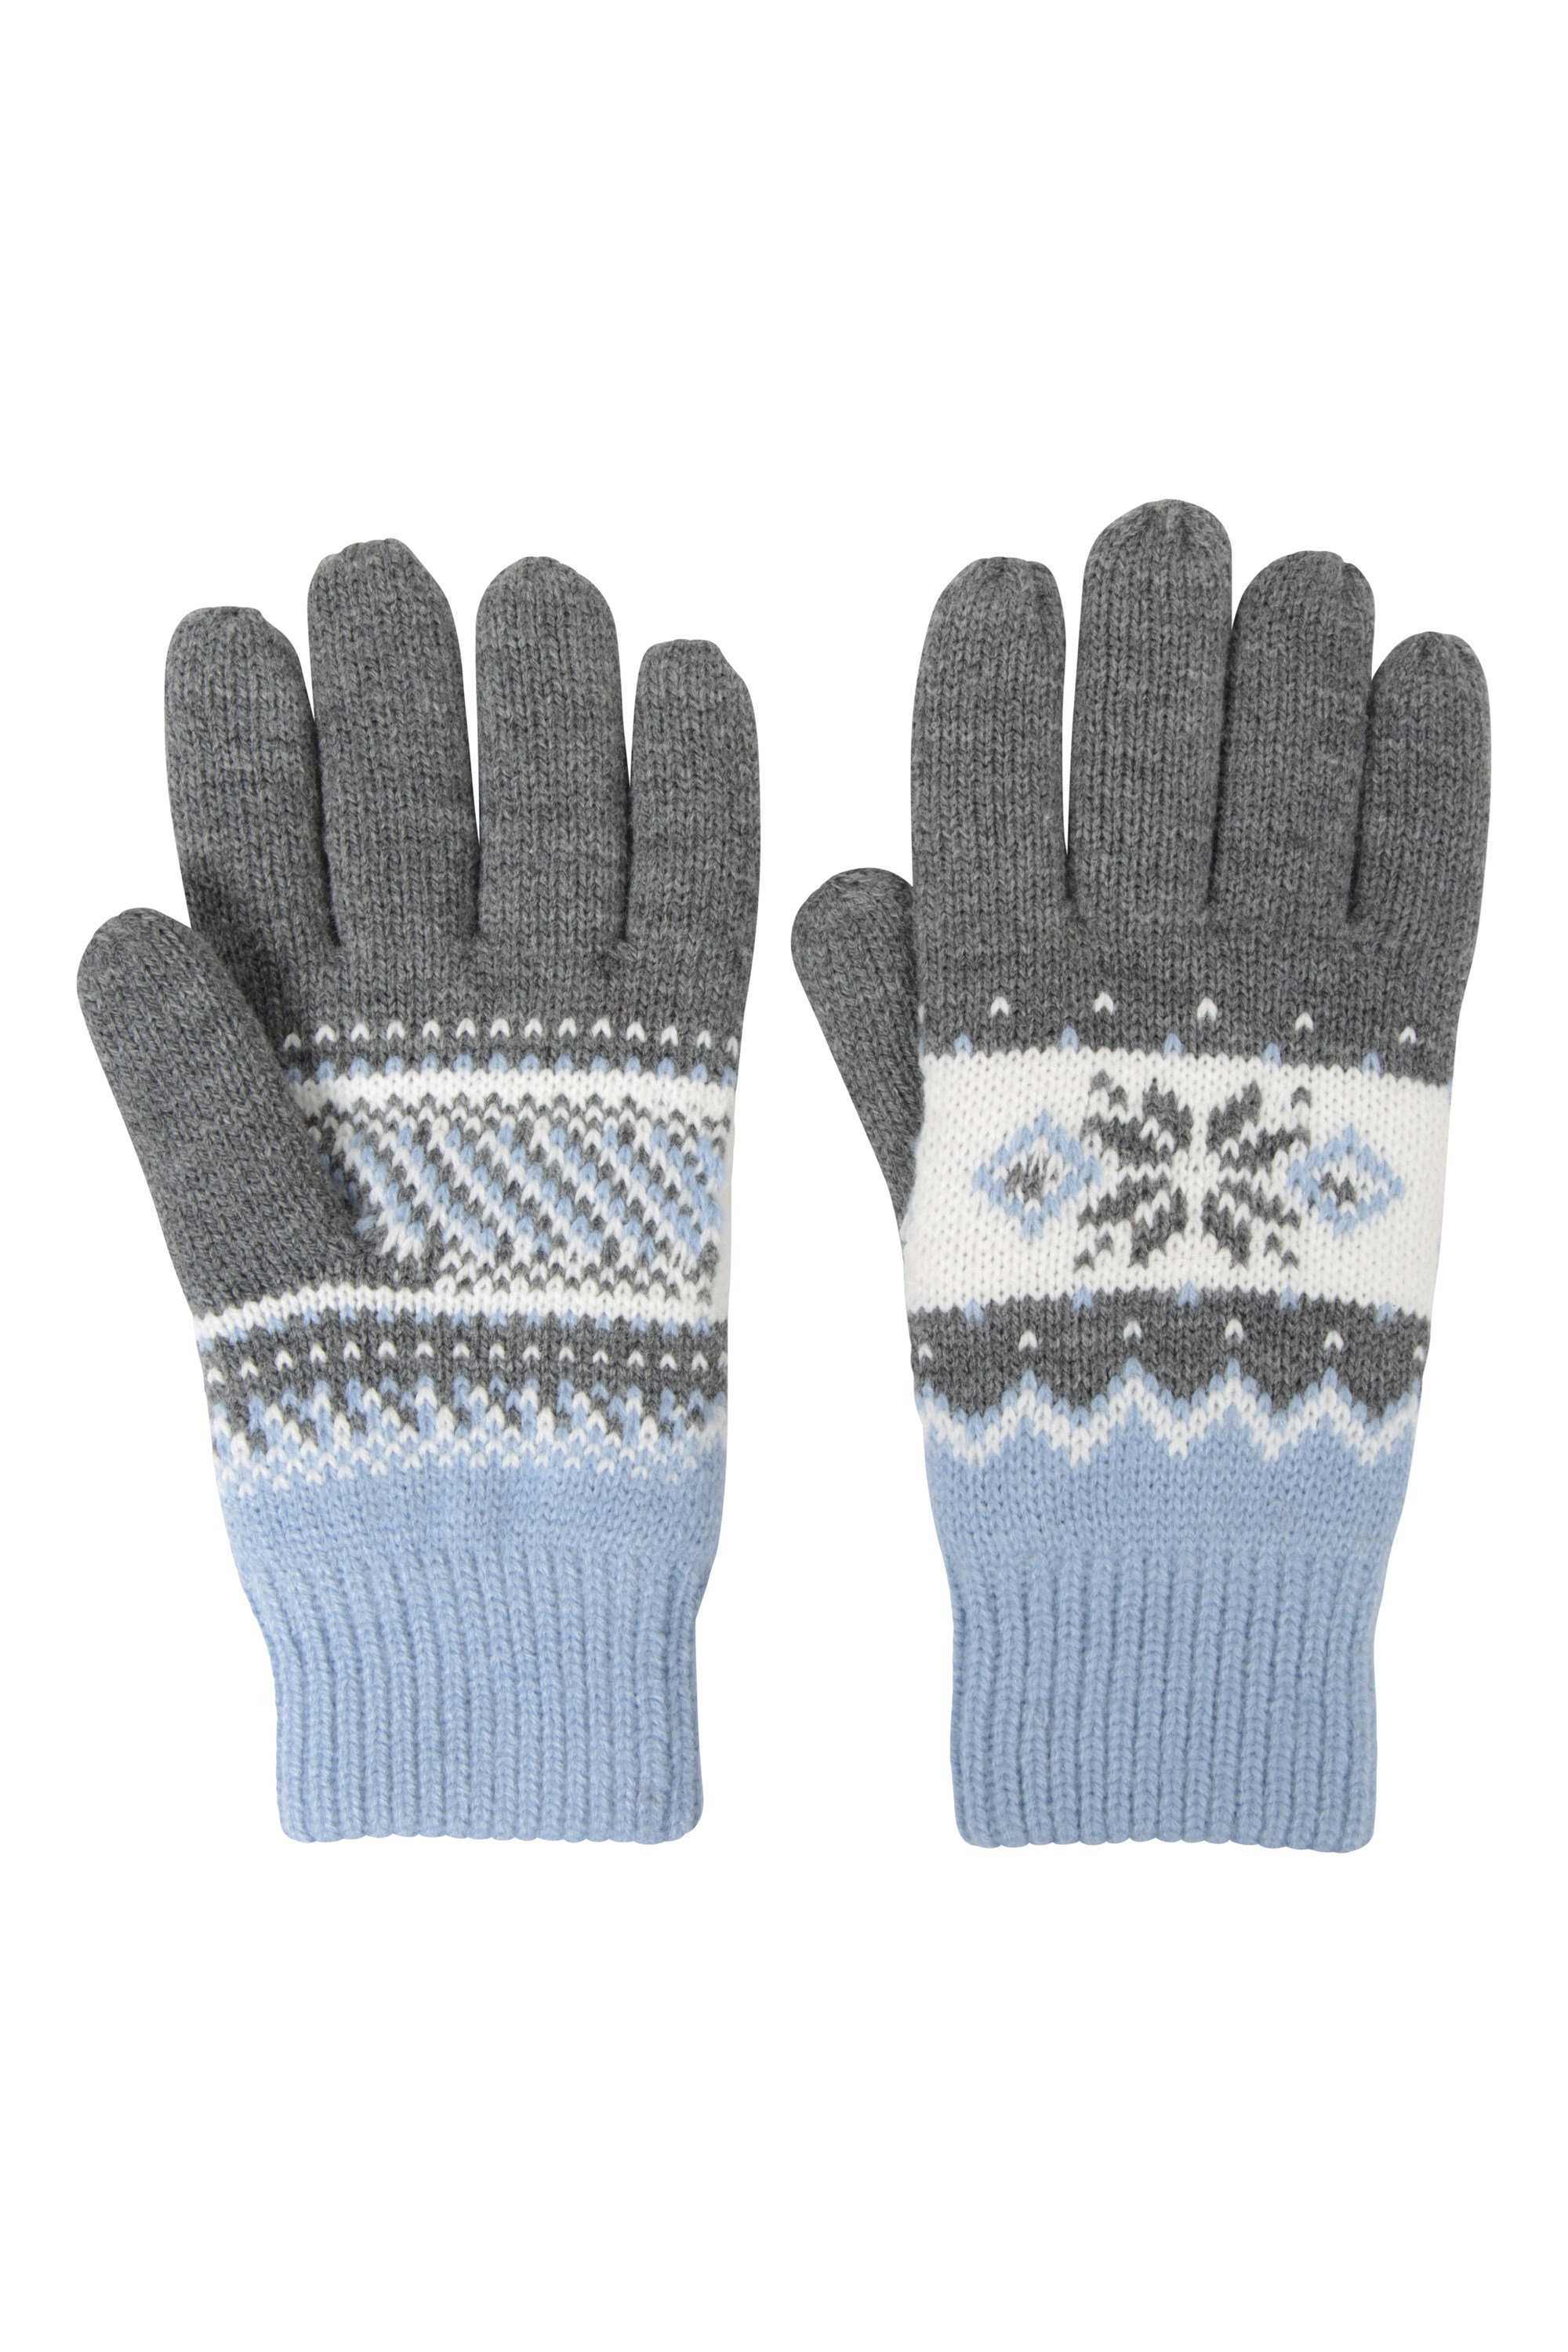 Mountain Warehouse Mountain Warehouse Fairisle Womens Thinsulate™ Gloves Thinsulate Lining 